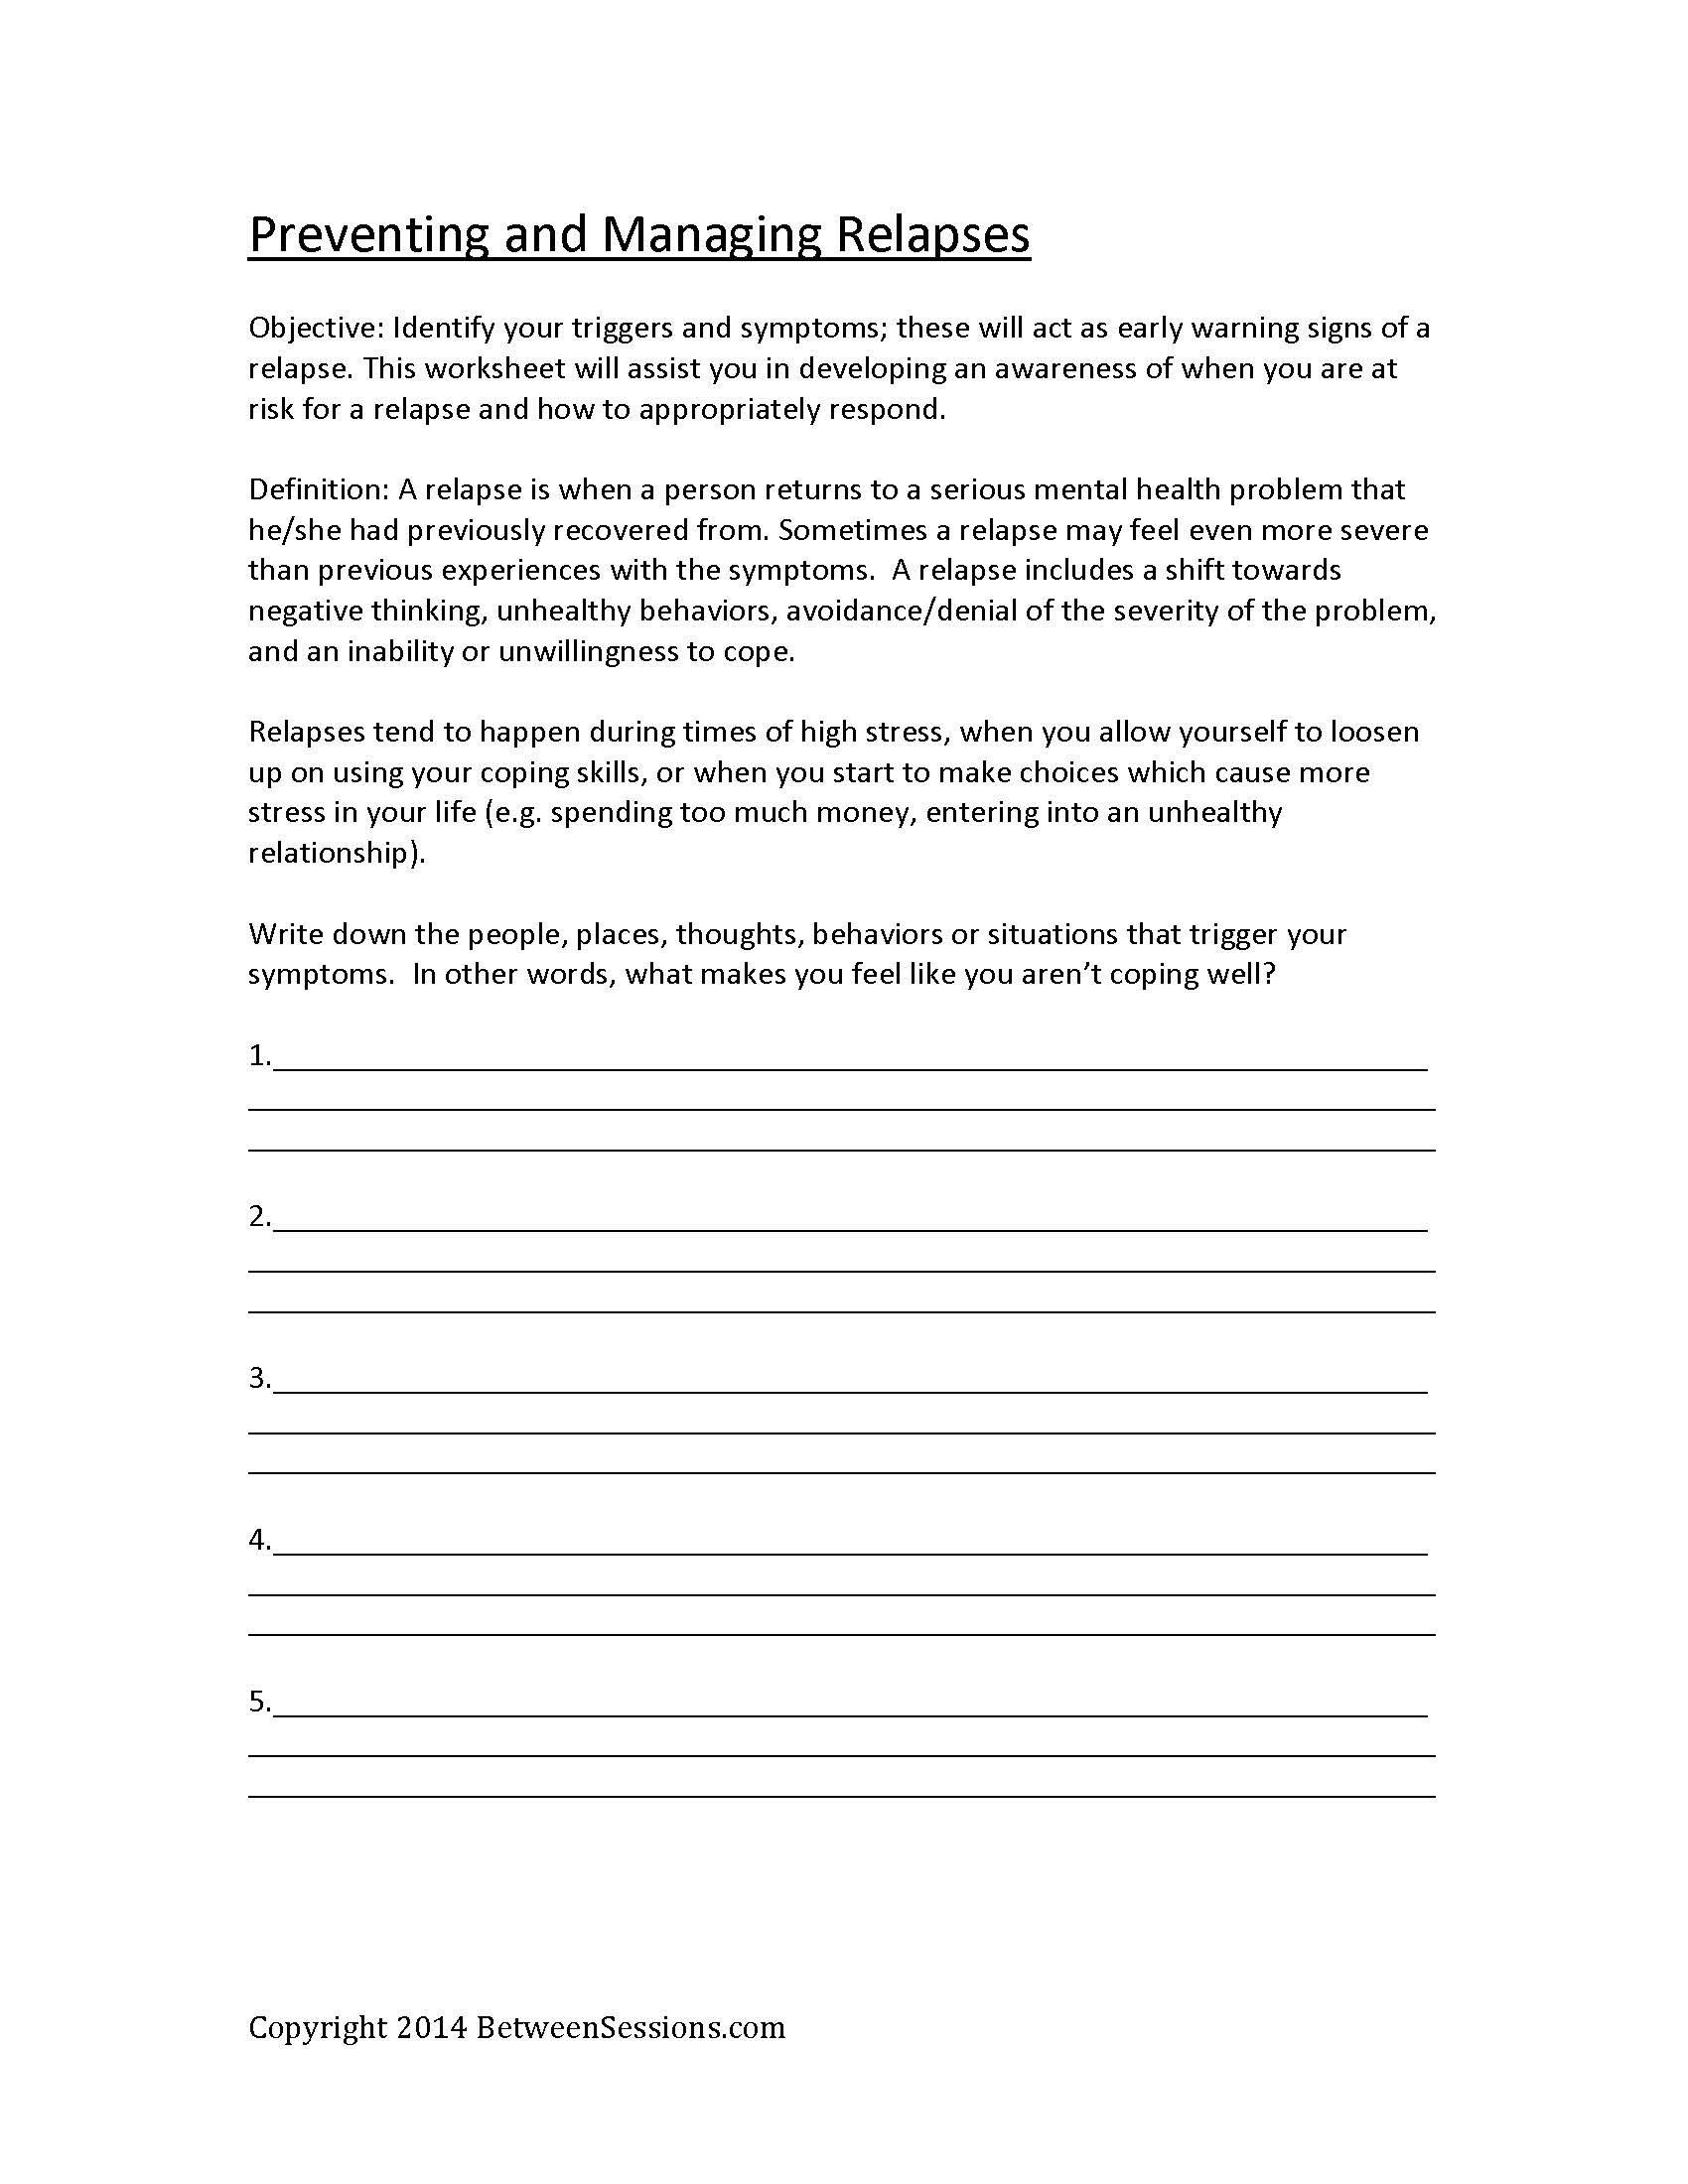 Between Sessions Anger Management Worksheets For Adults  Anger For Communication Worksheets For Adults Pdf